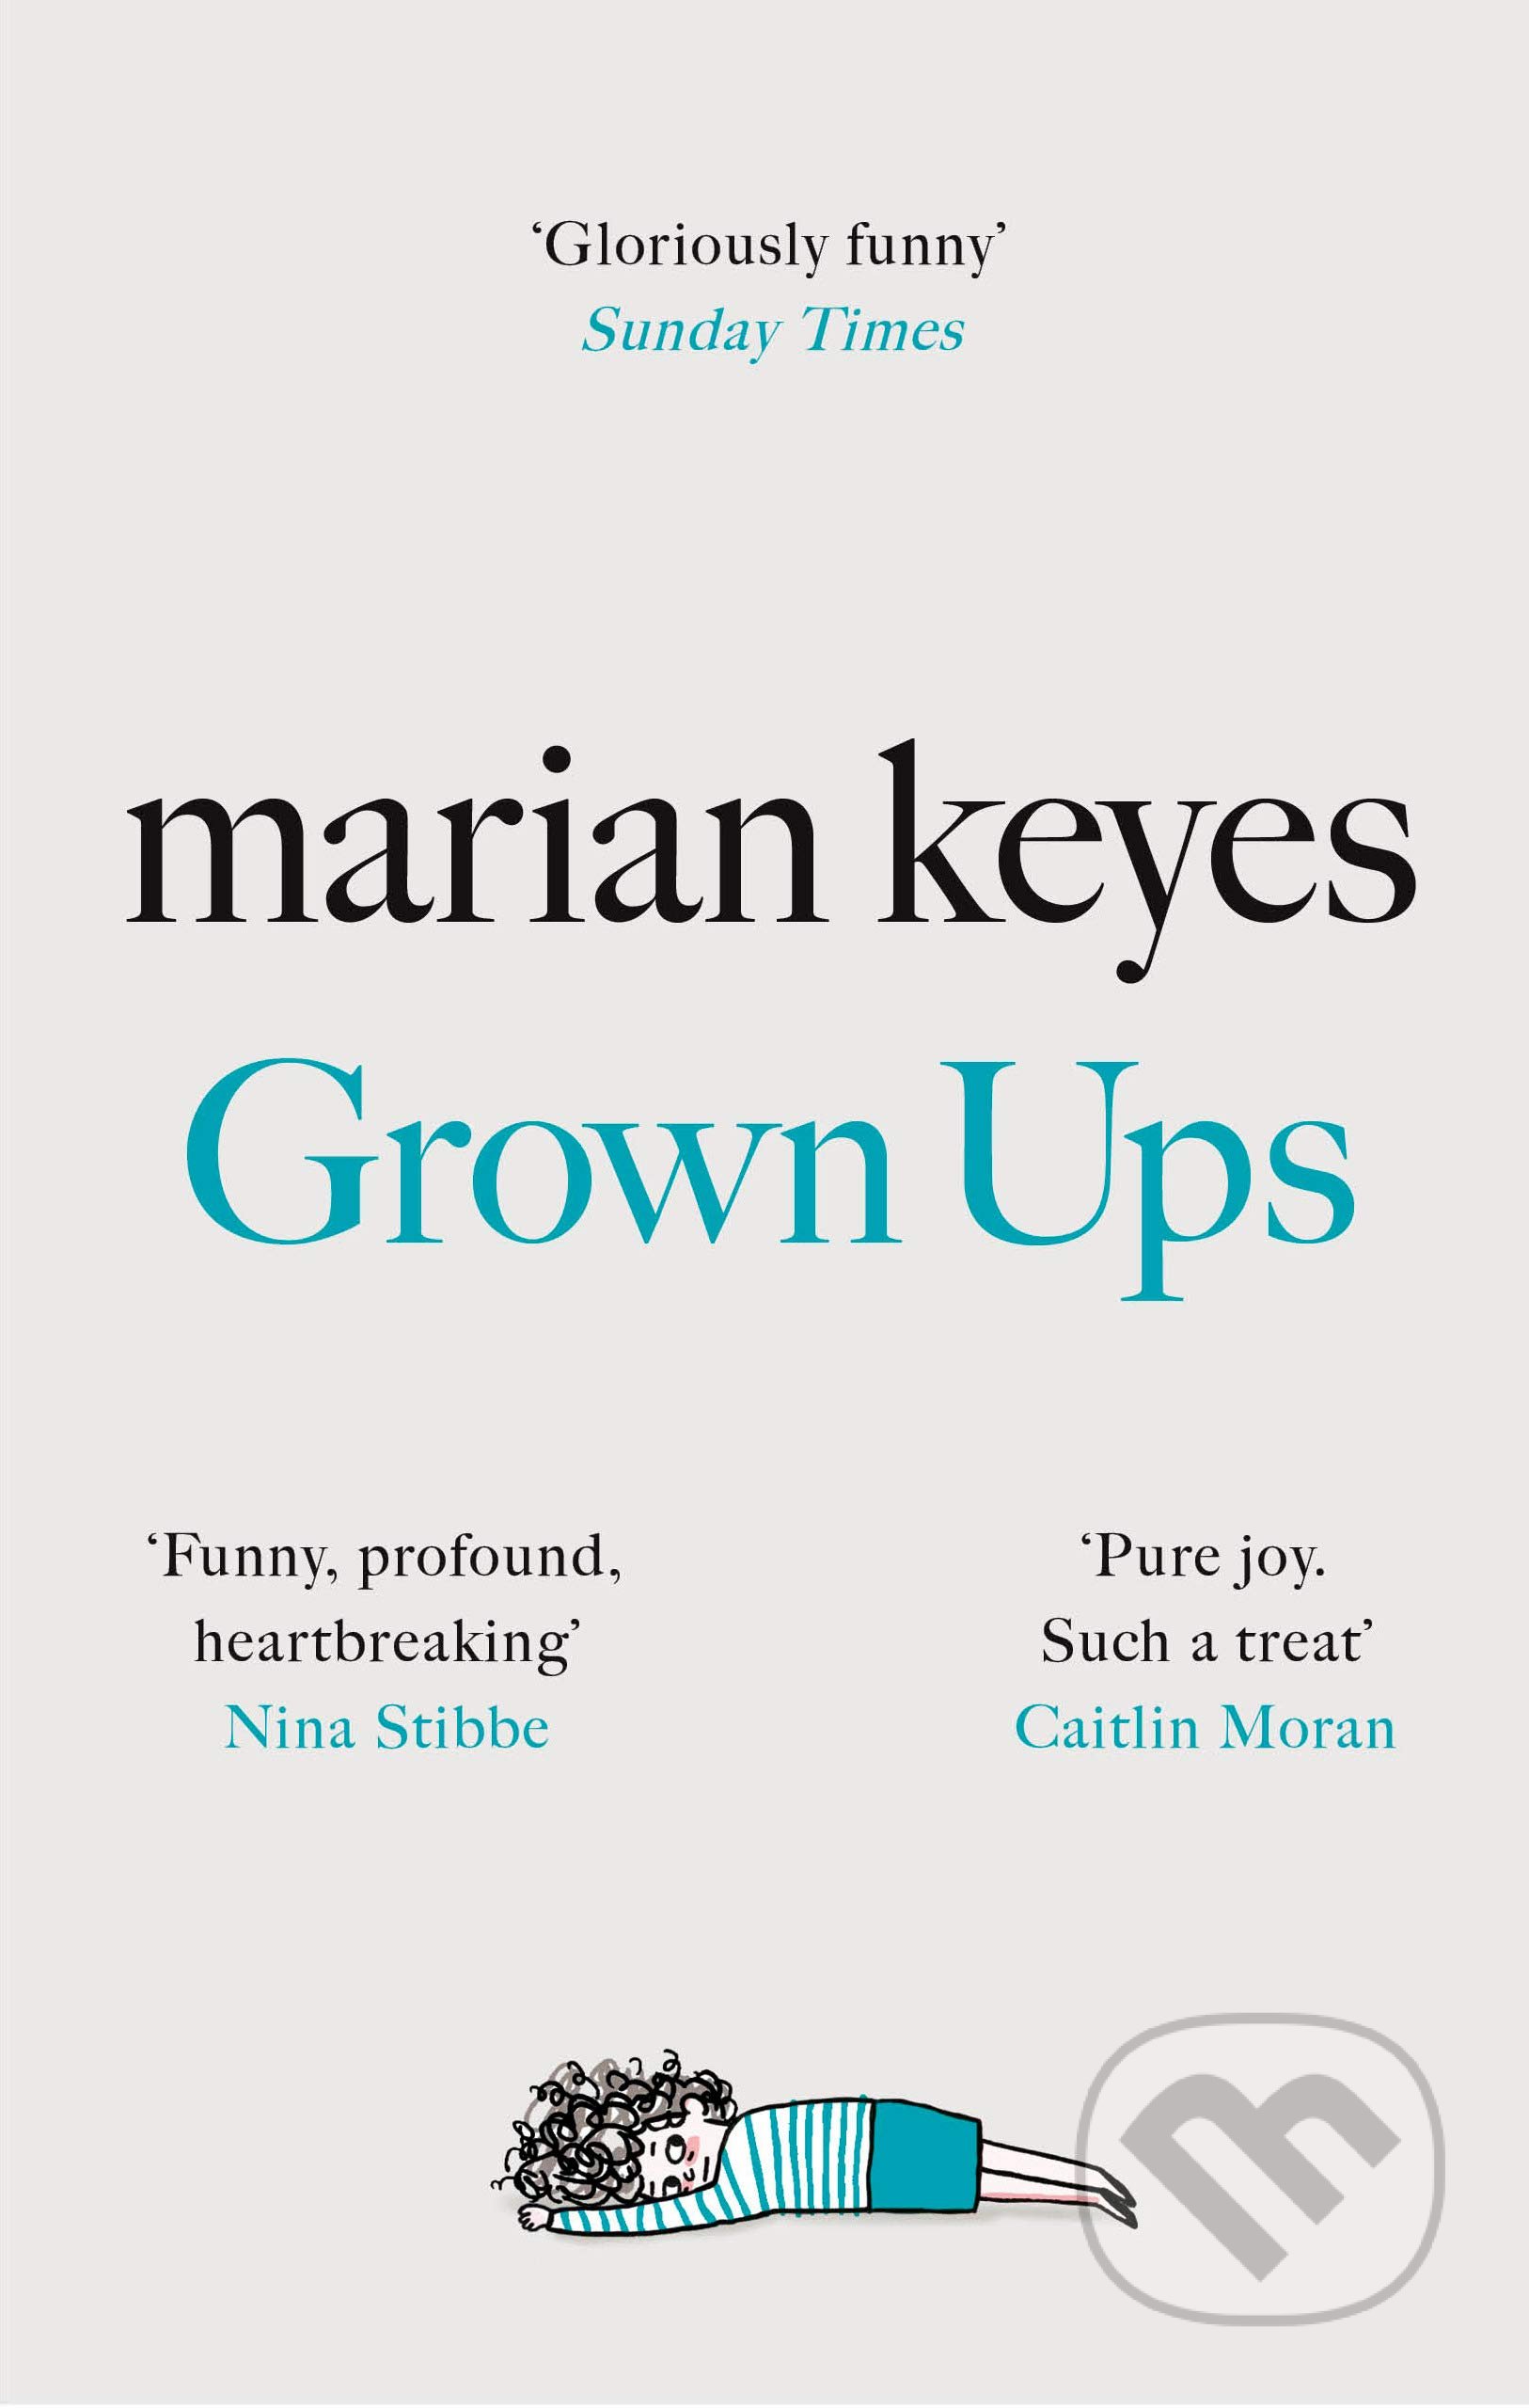 grown ups marian keyes plot